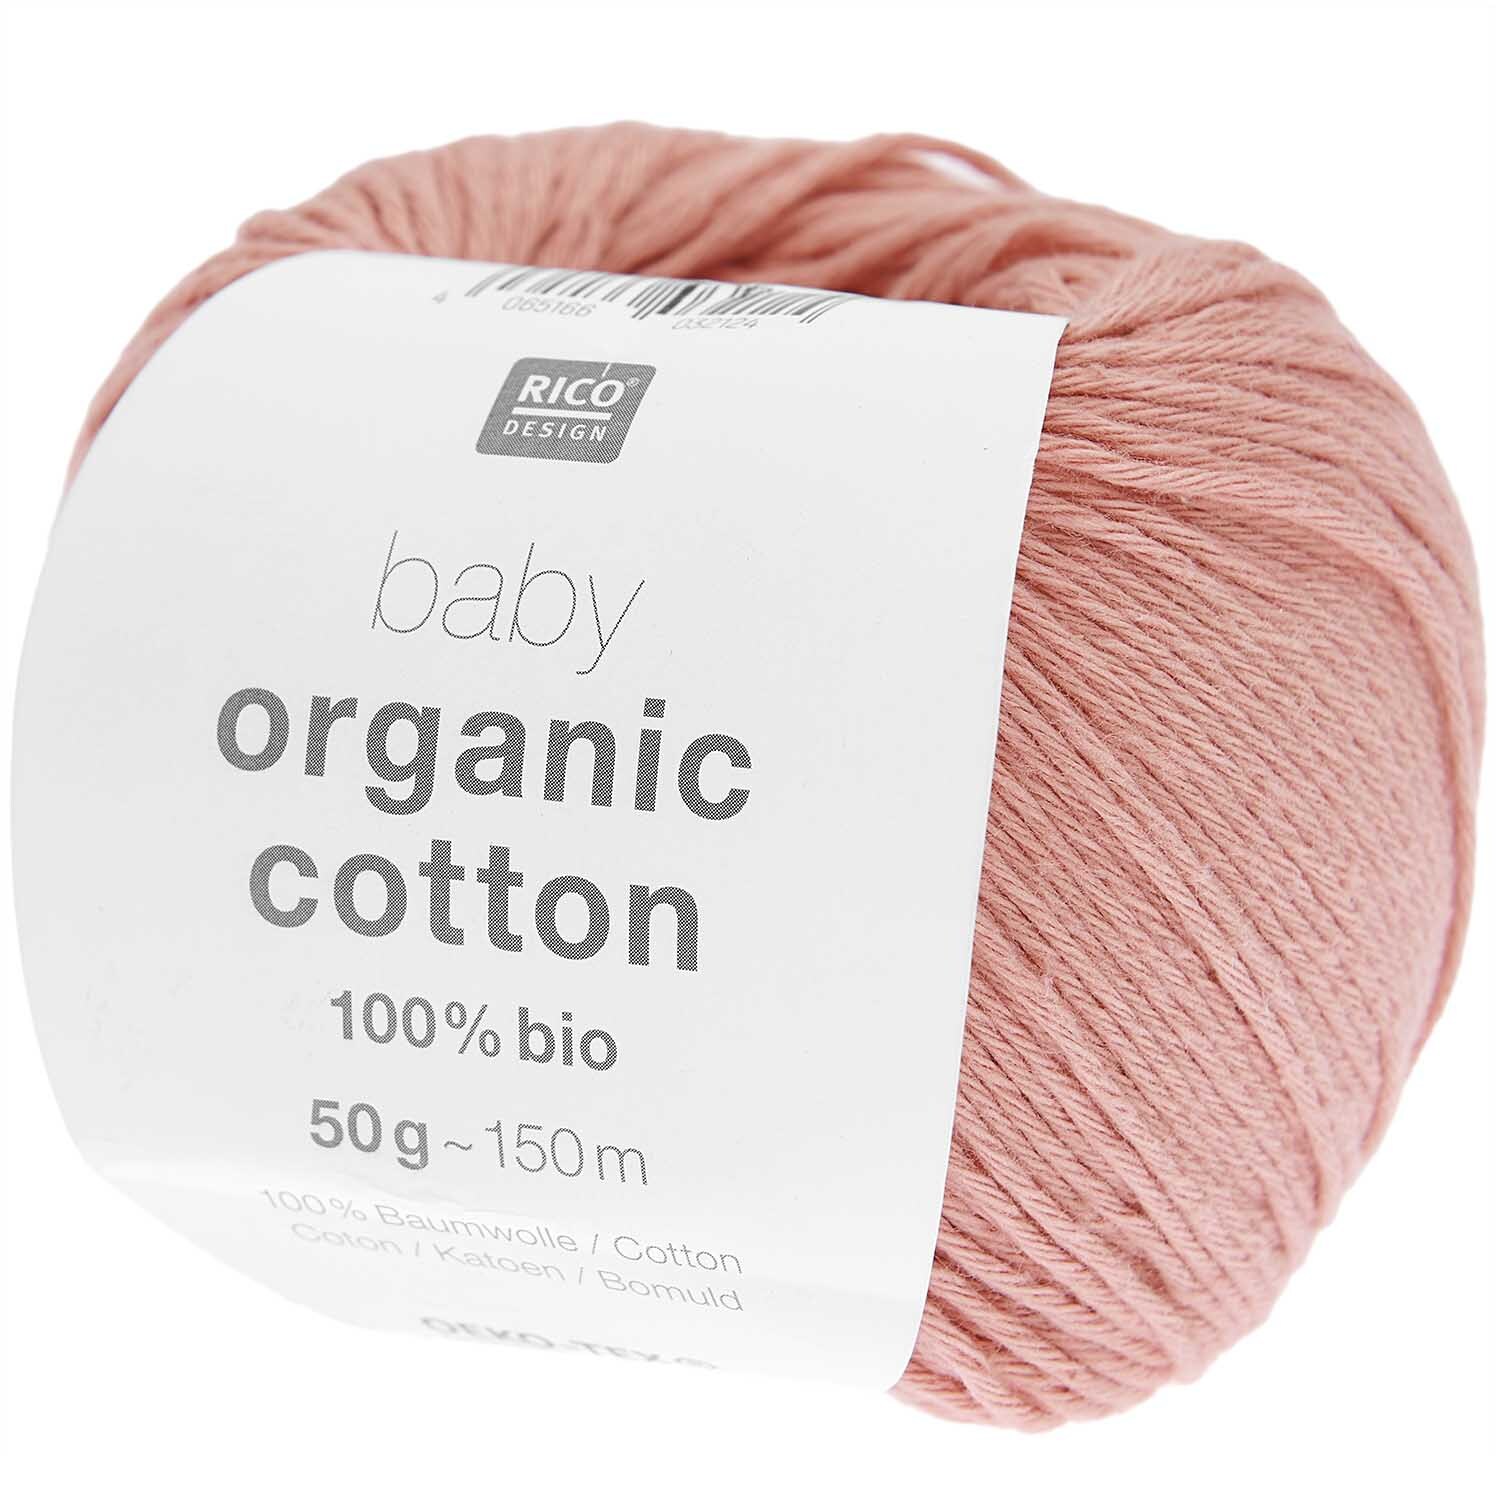 Baby Organic Cotton